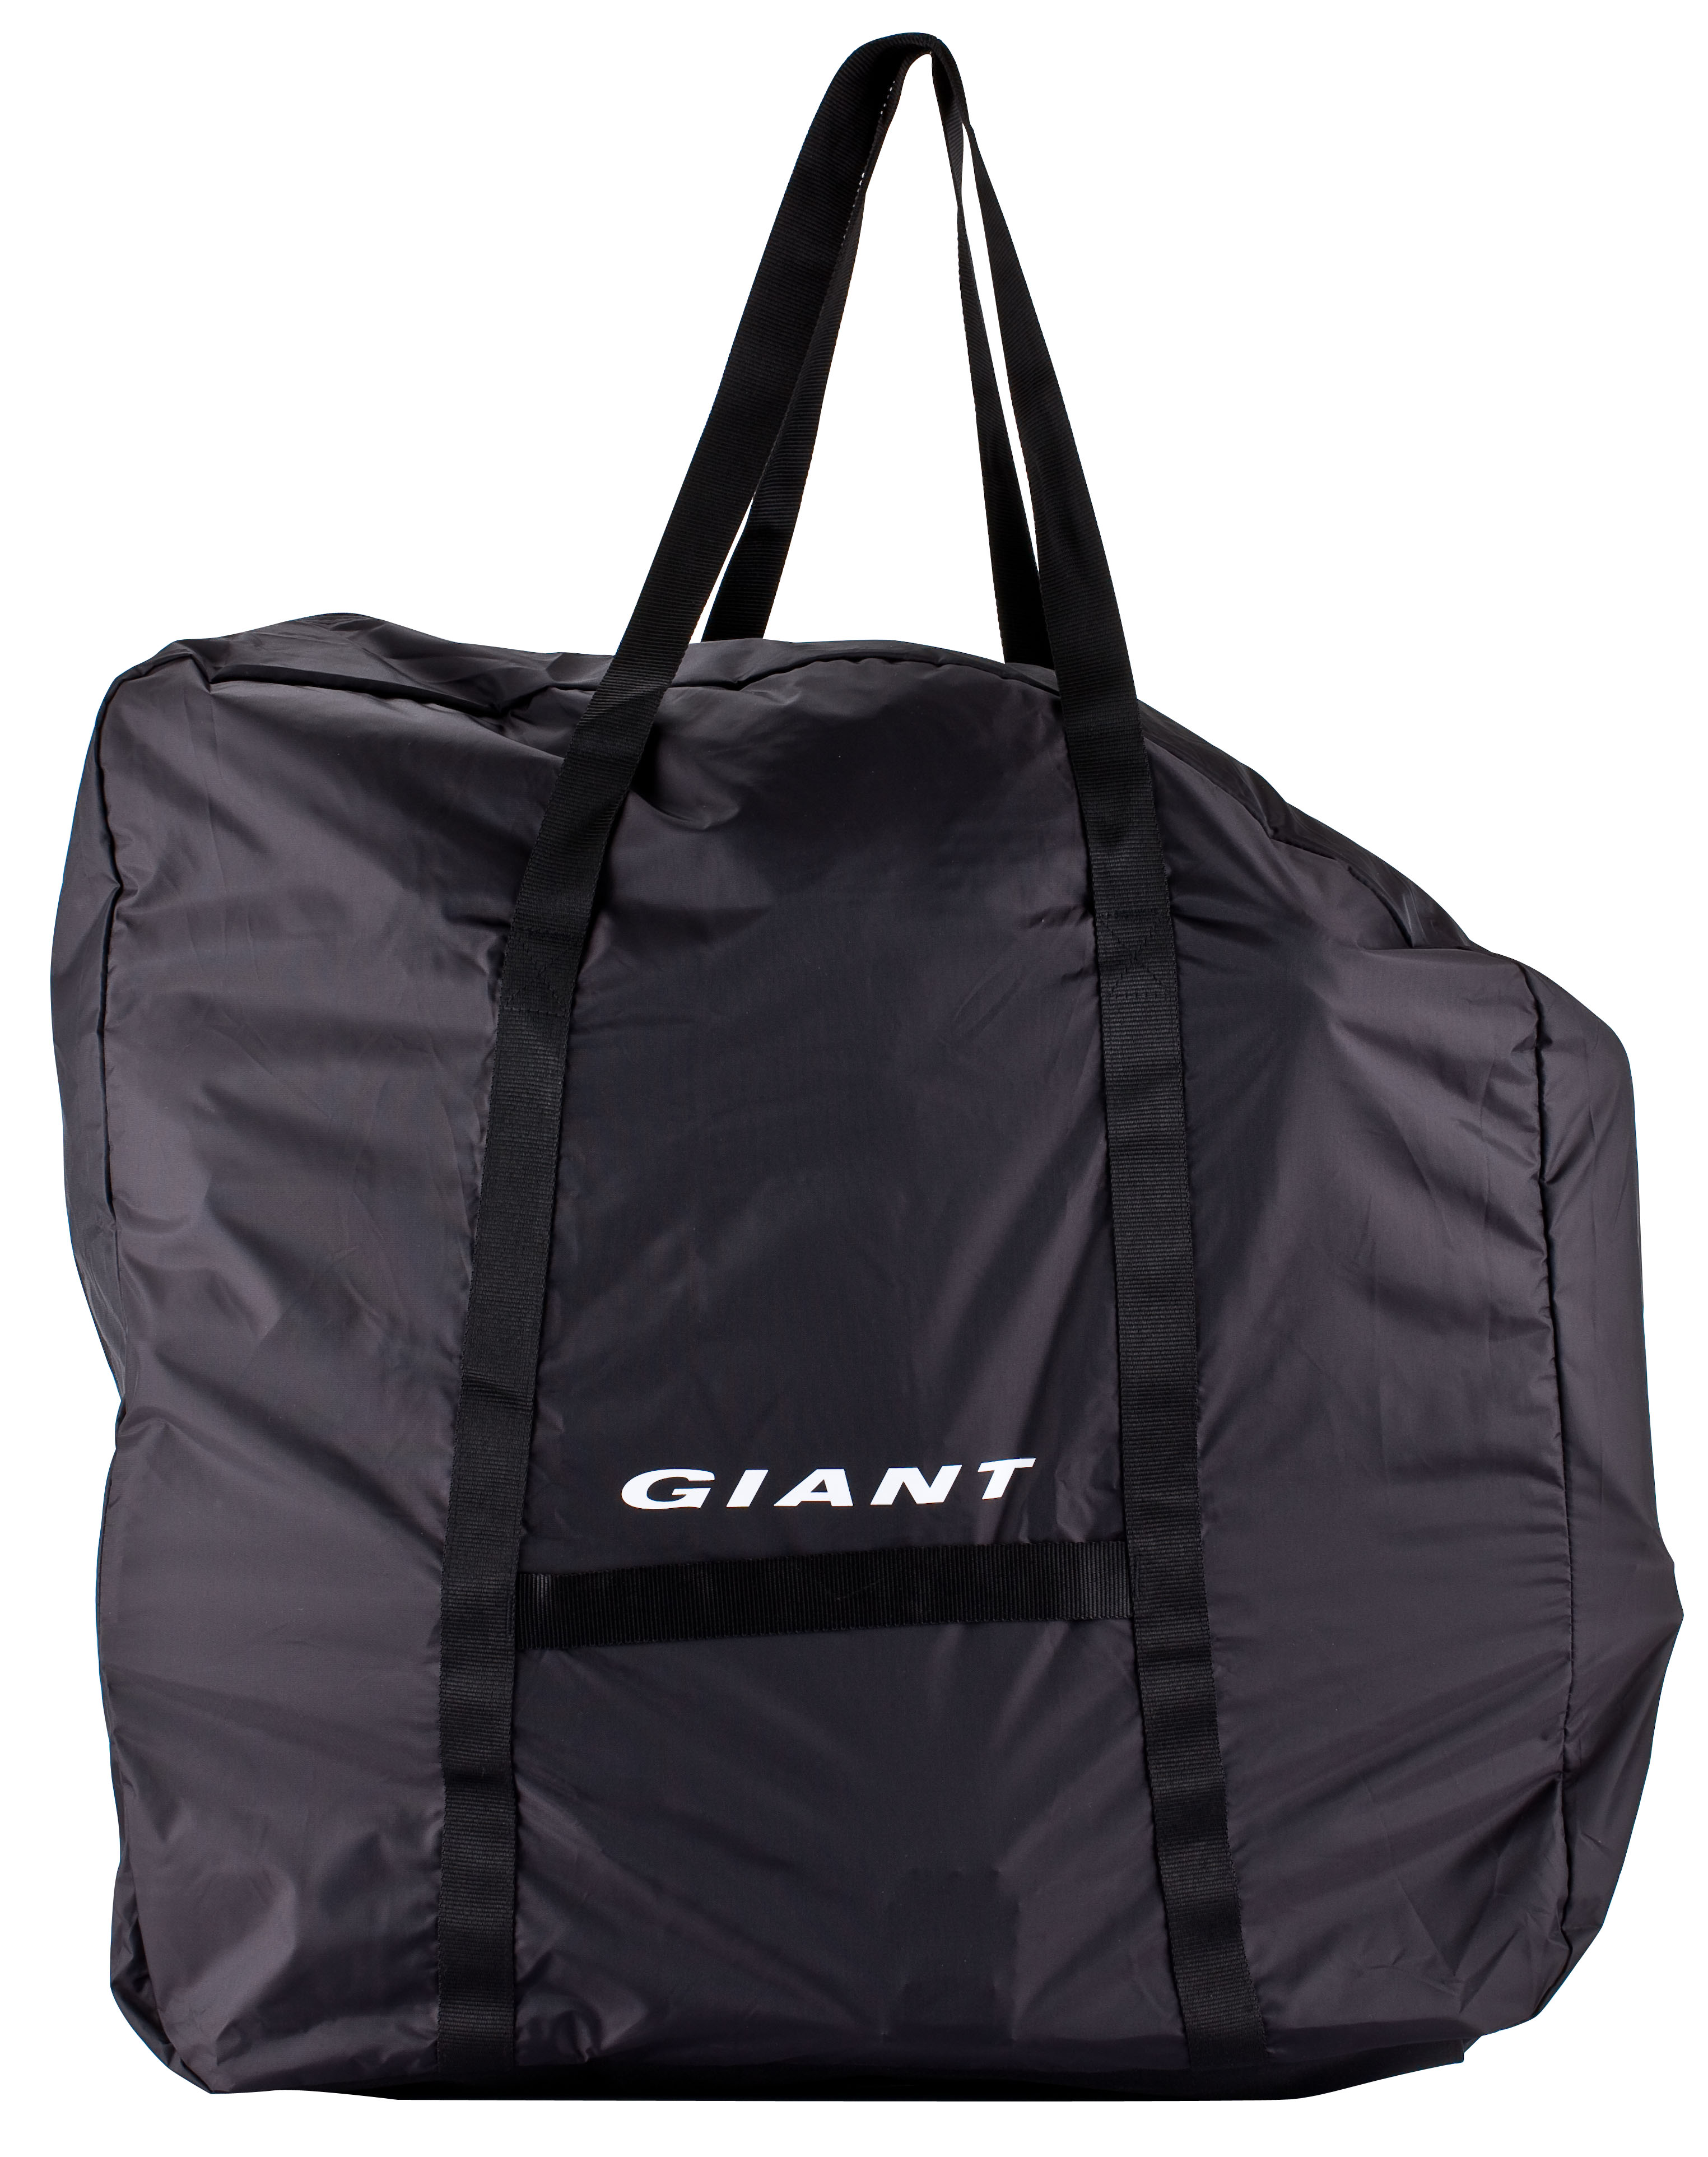 GIANT 加大版 20 折疊車攜車袋